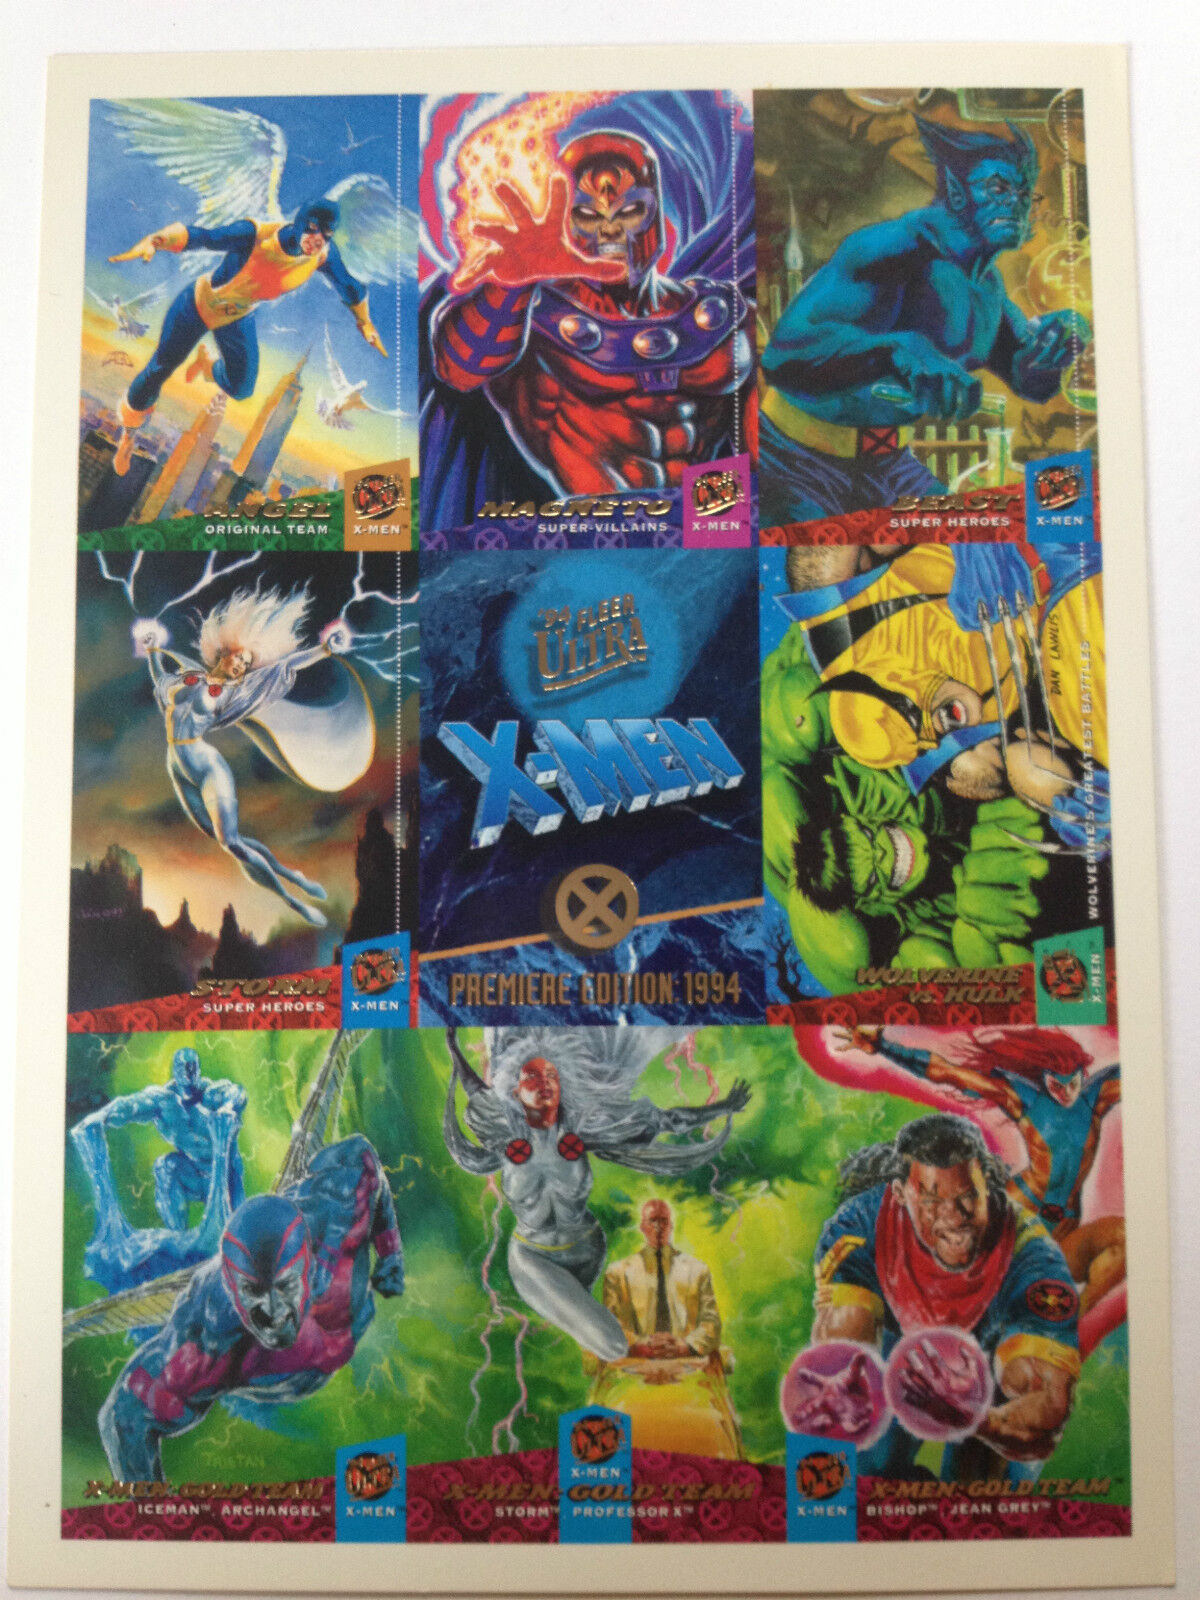 Primary image for Fleer Ultra Marvel Super Hero Promo Card Sheet X-Men Premiere Edition 1994 